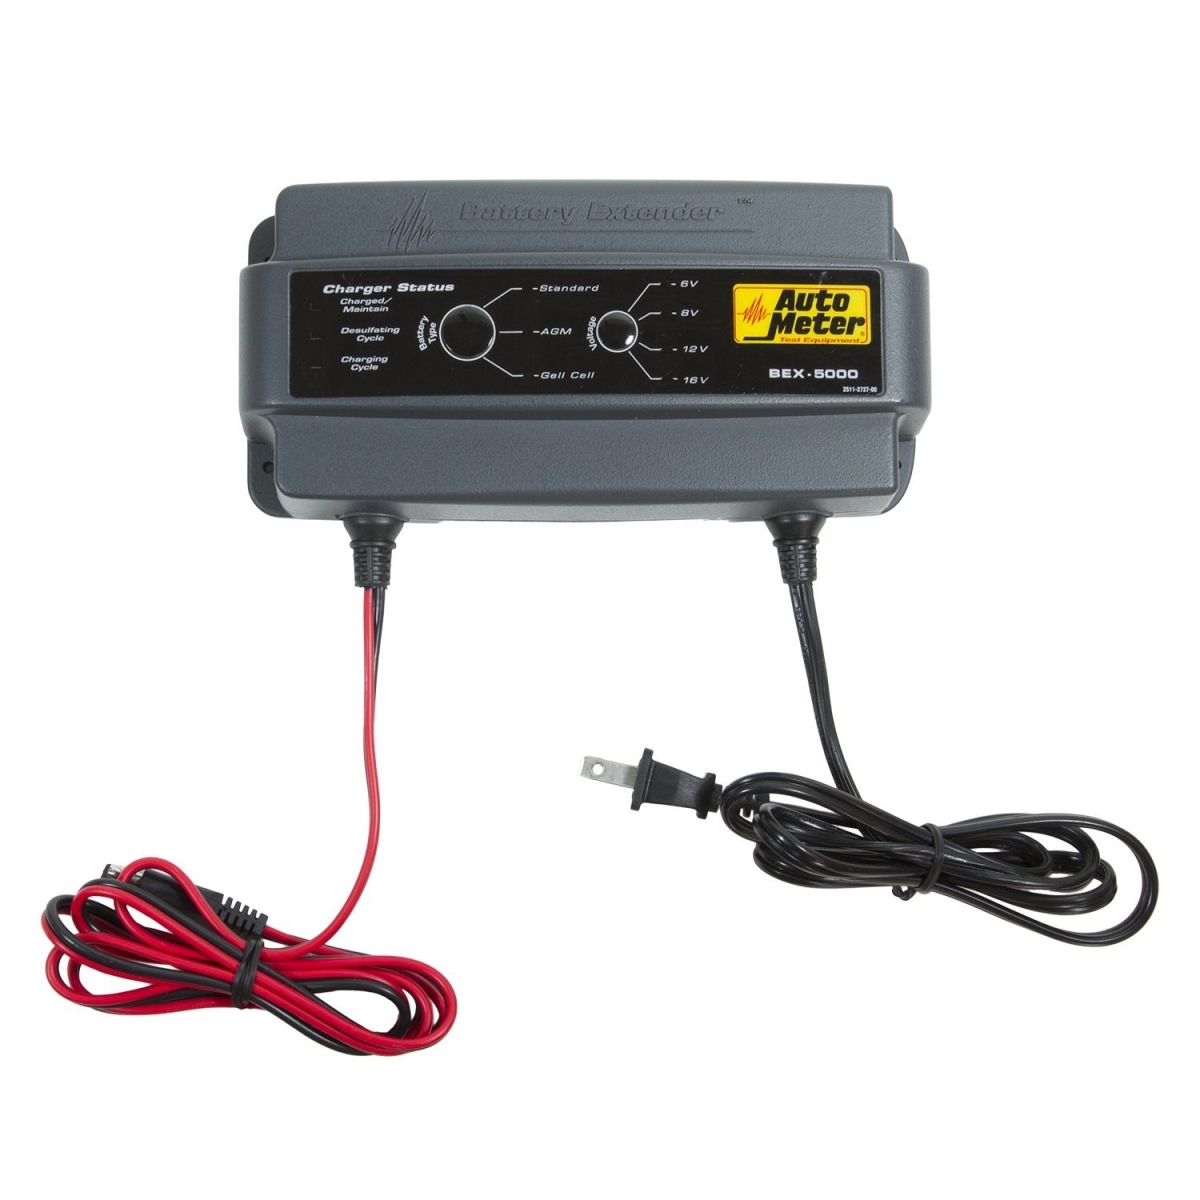 A48-bex5000 6-16 V 5 Amp Battery Extender